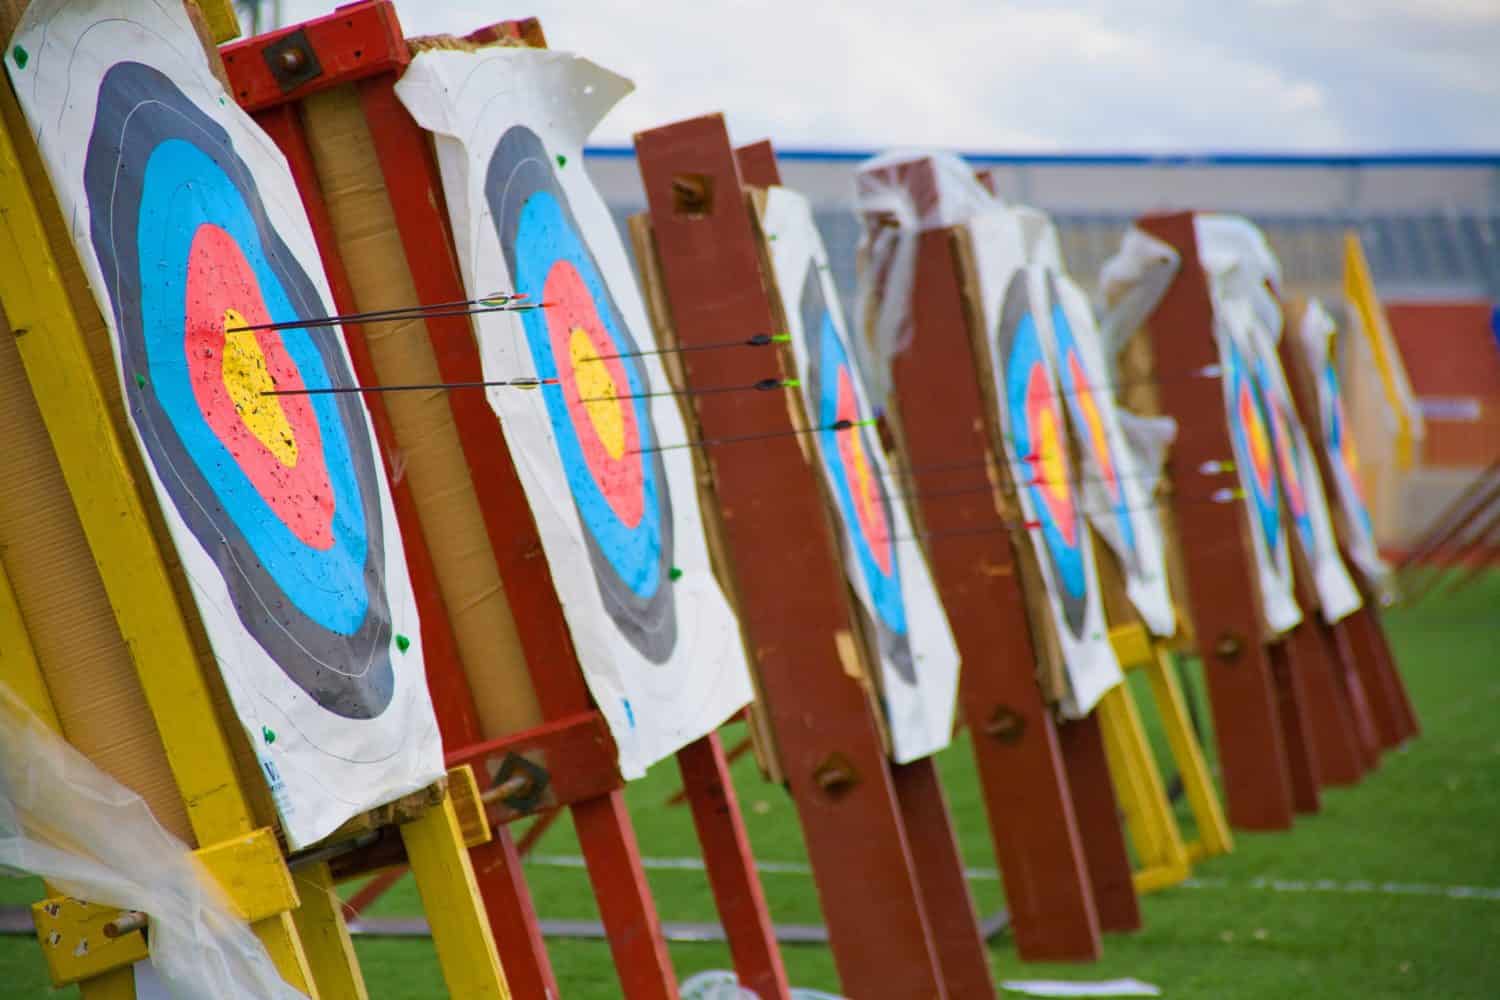 Archery Target. High quality photo